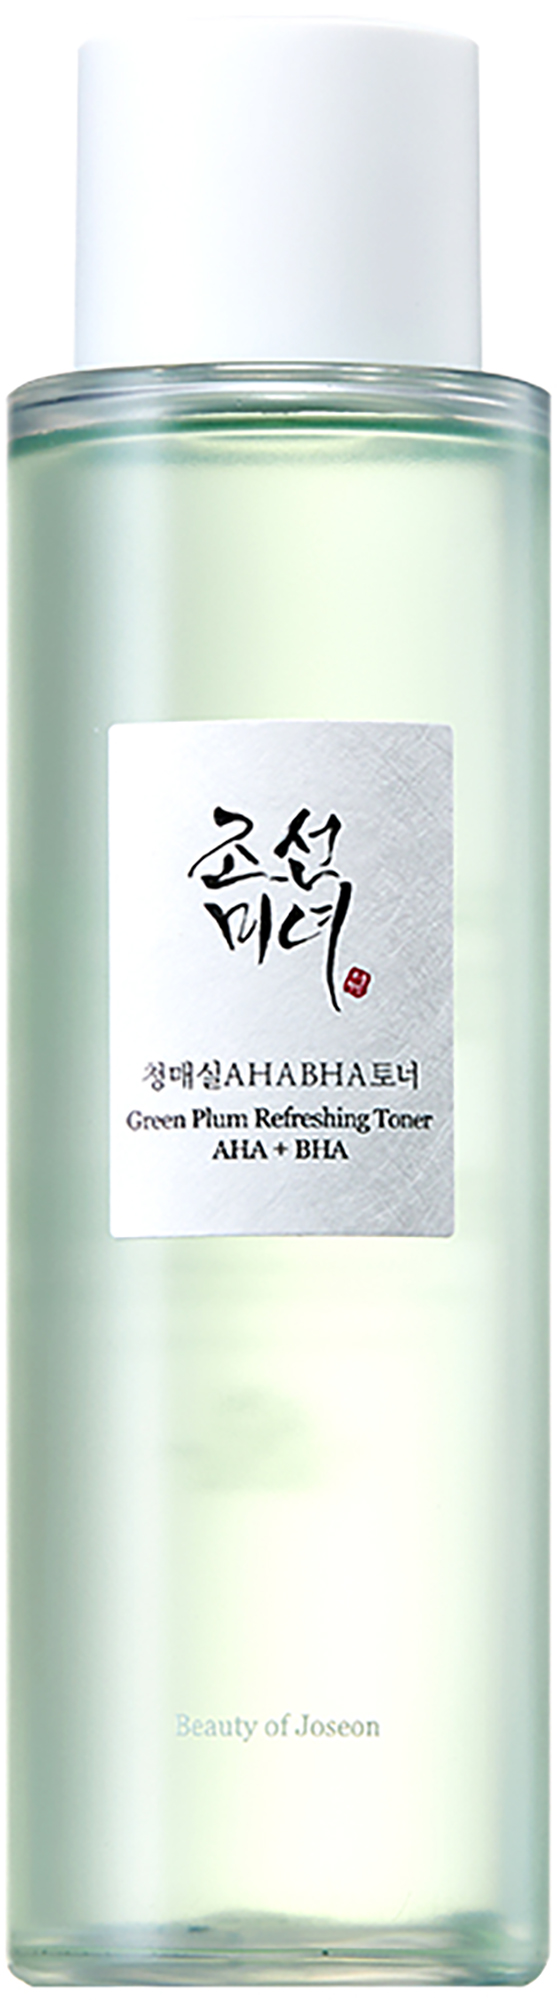 Beauty of Joseon Exfoliační tonikum s AHA a BHA kyselinami Green Plum (Refreshing Toner) 150 ml